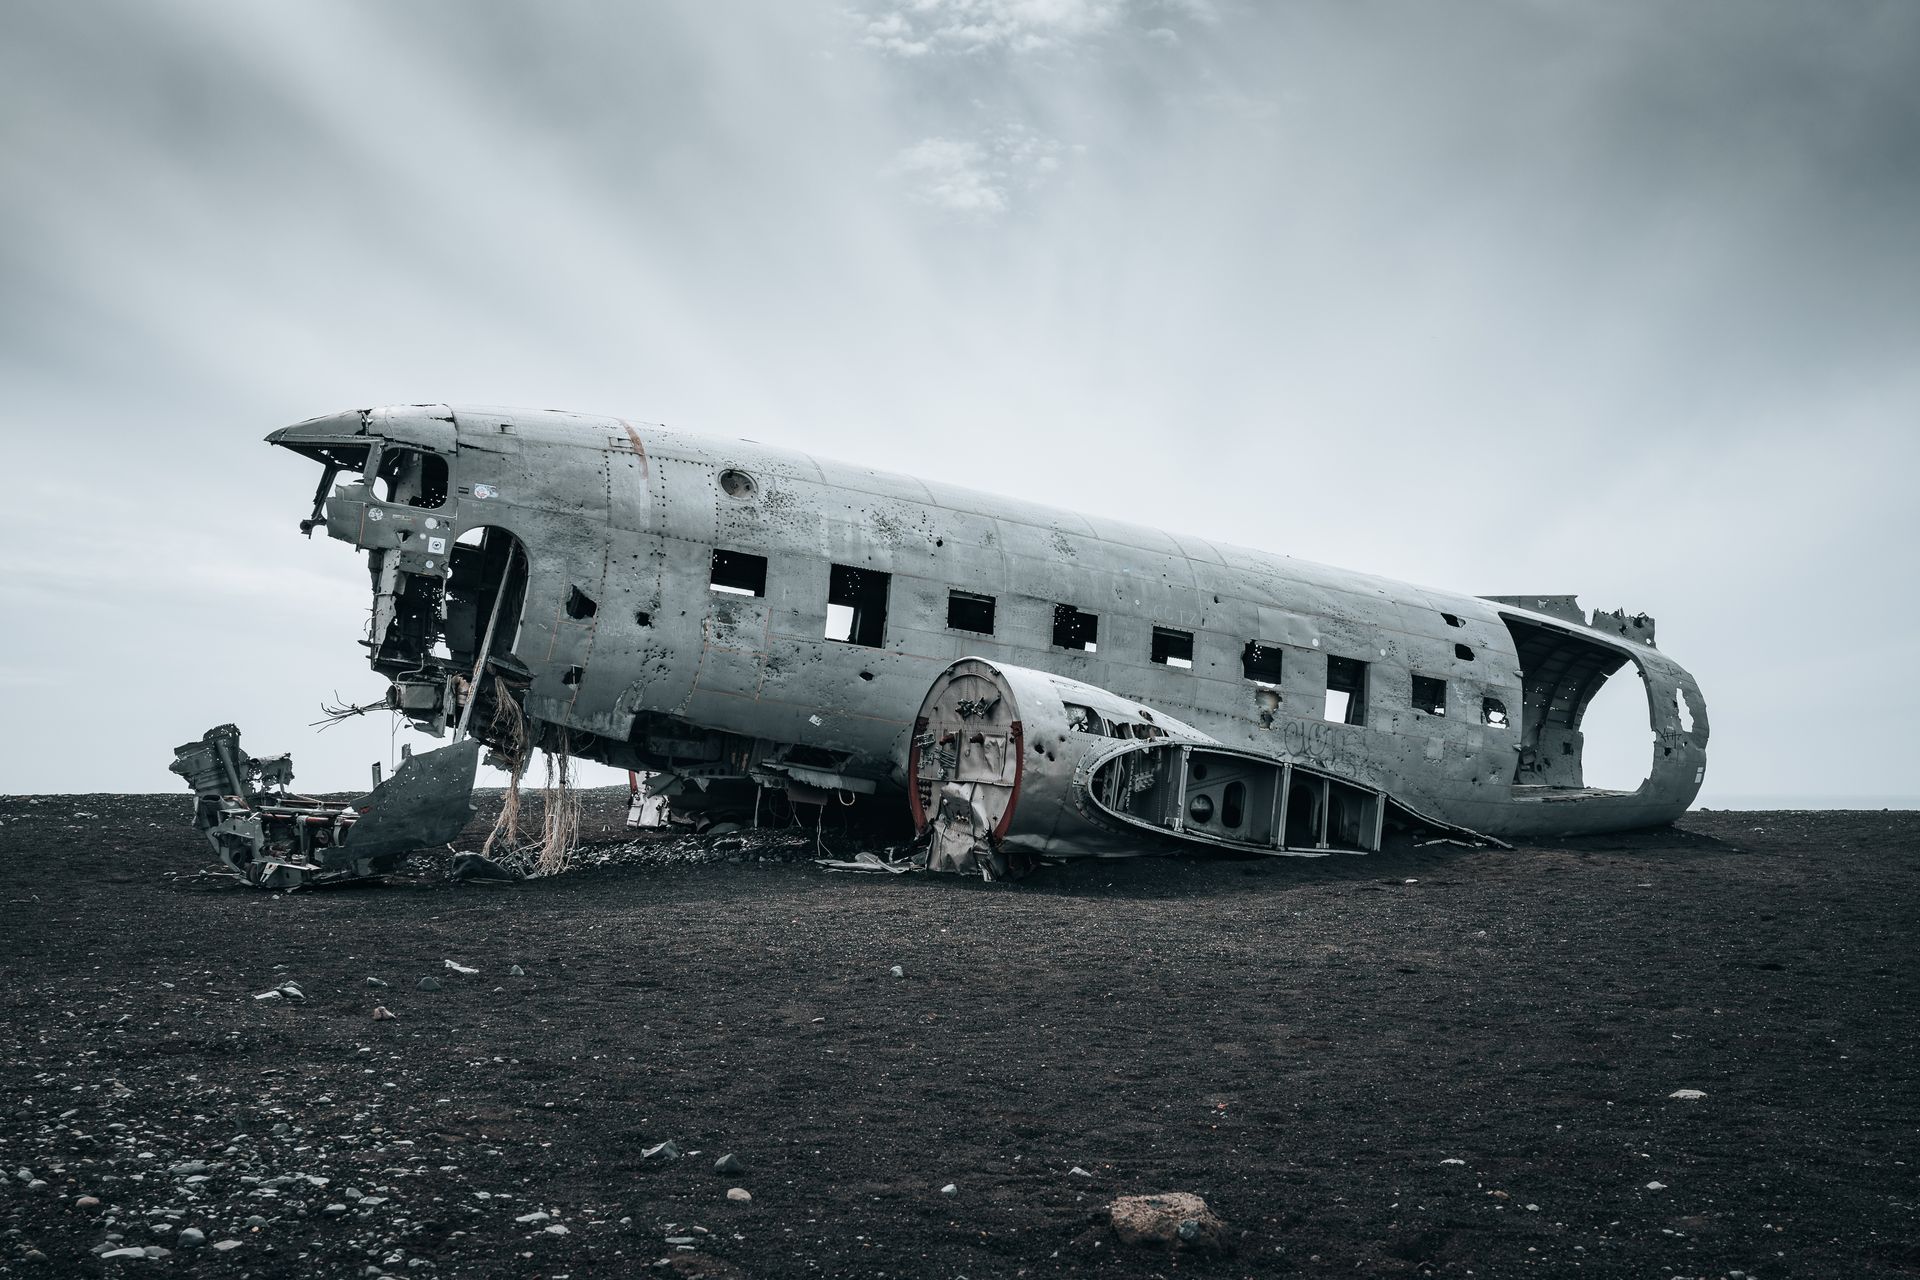 DC-3 airplane wreckage at black beach, Sólheimasandur, Iceland